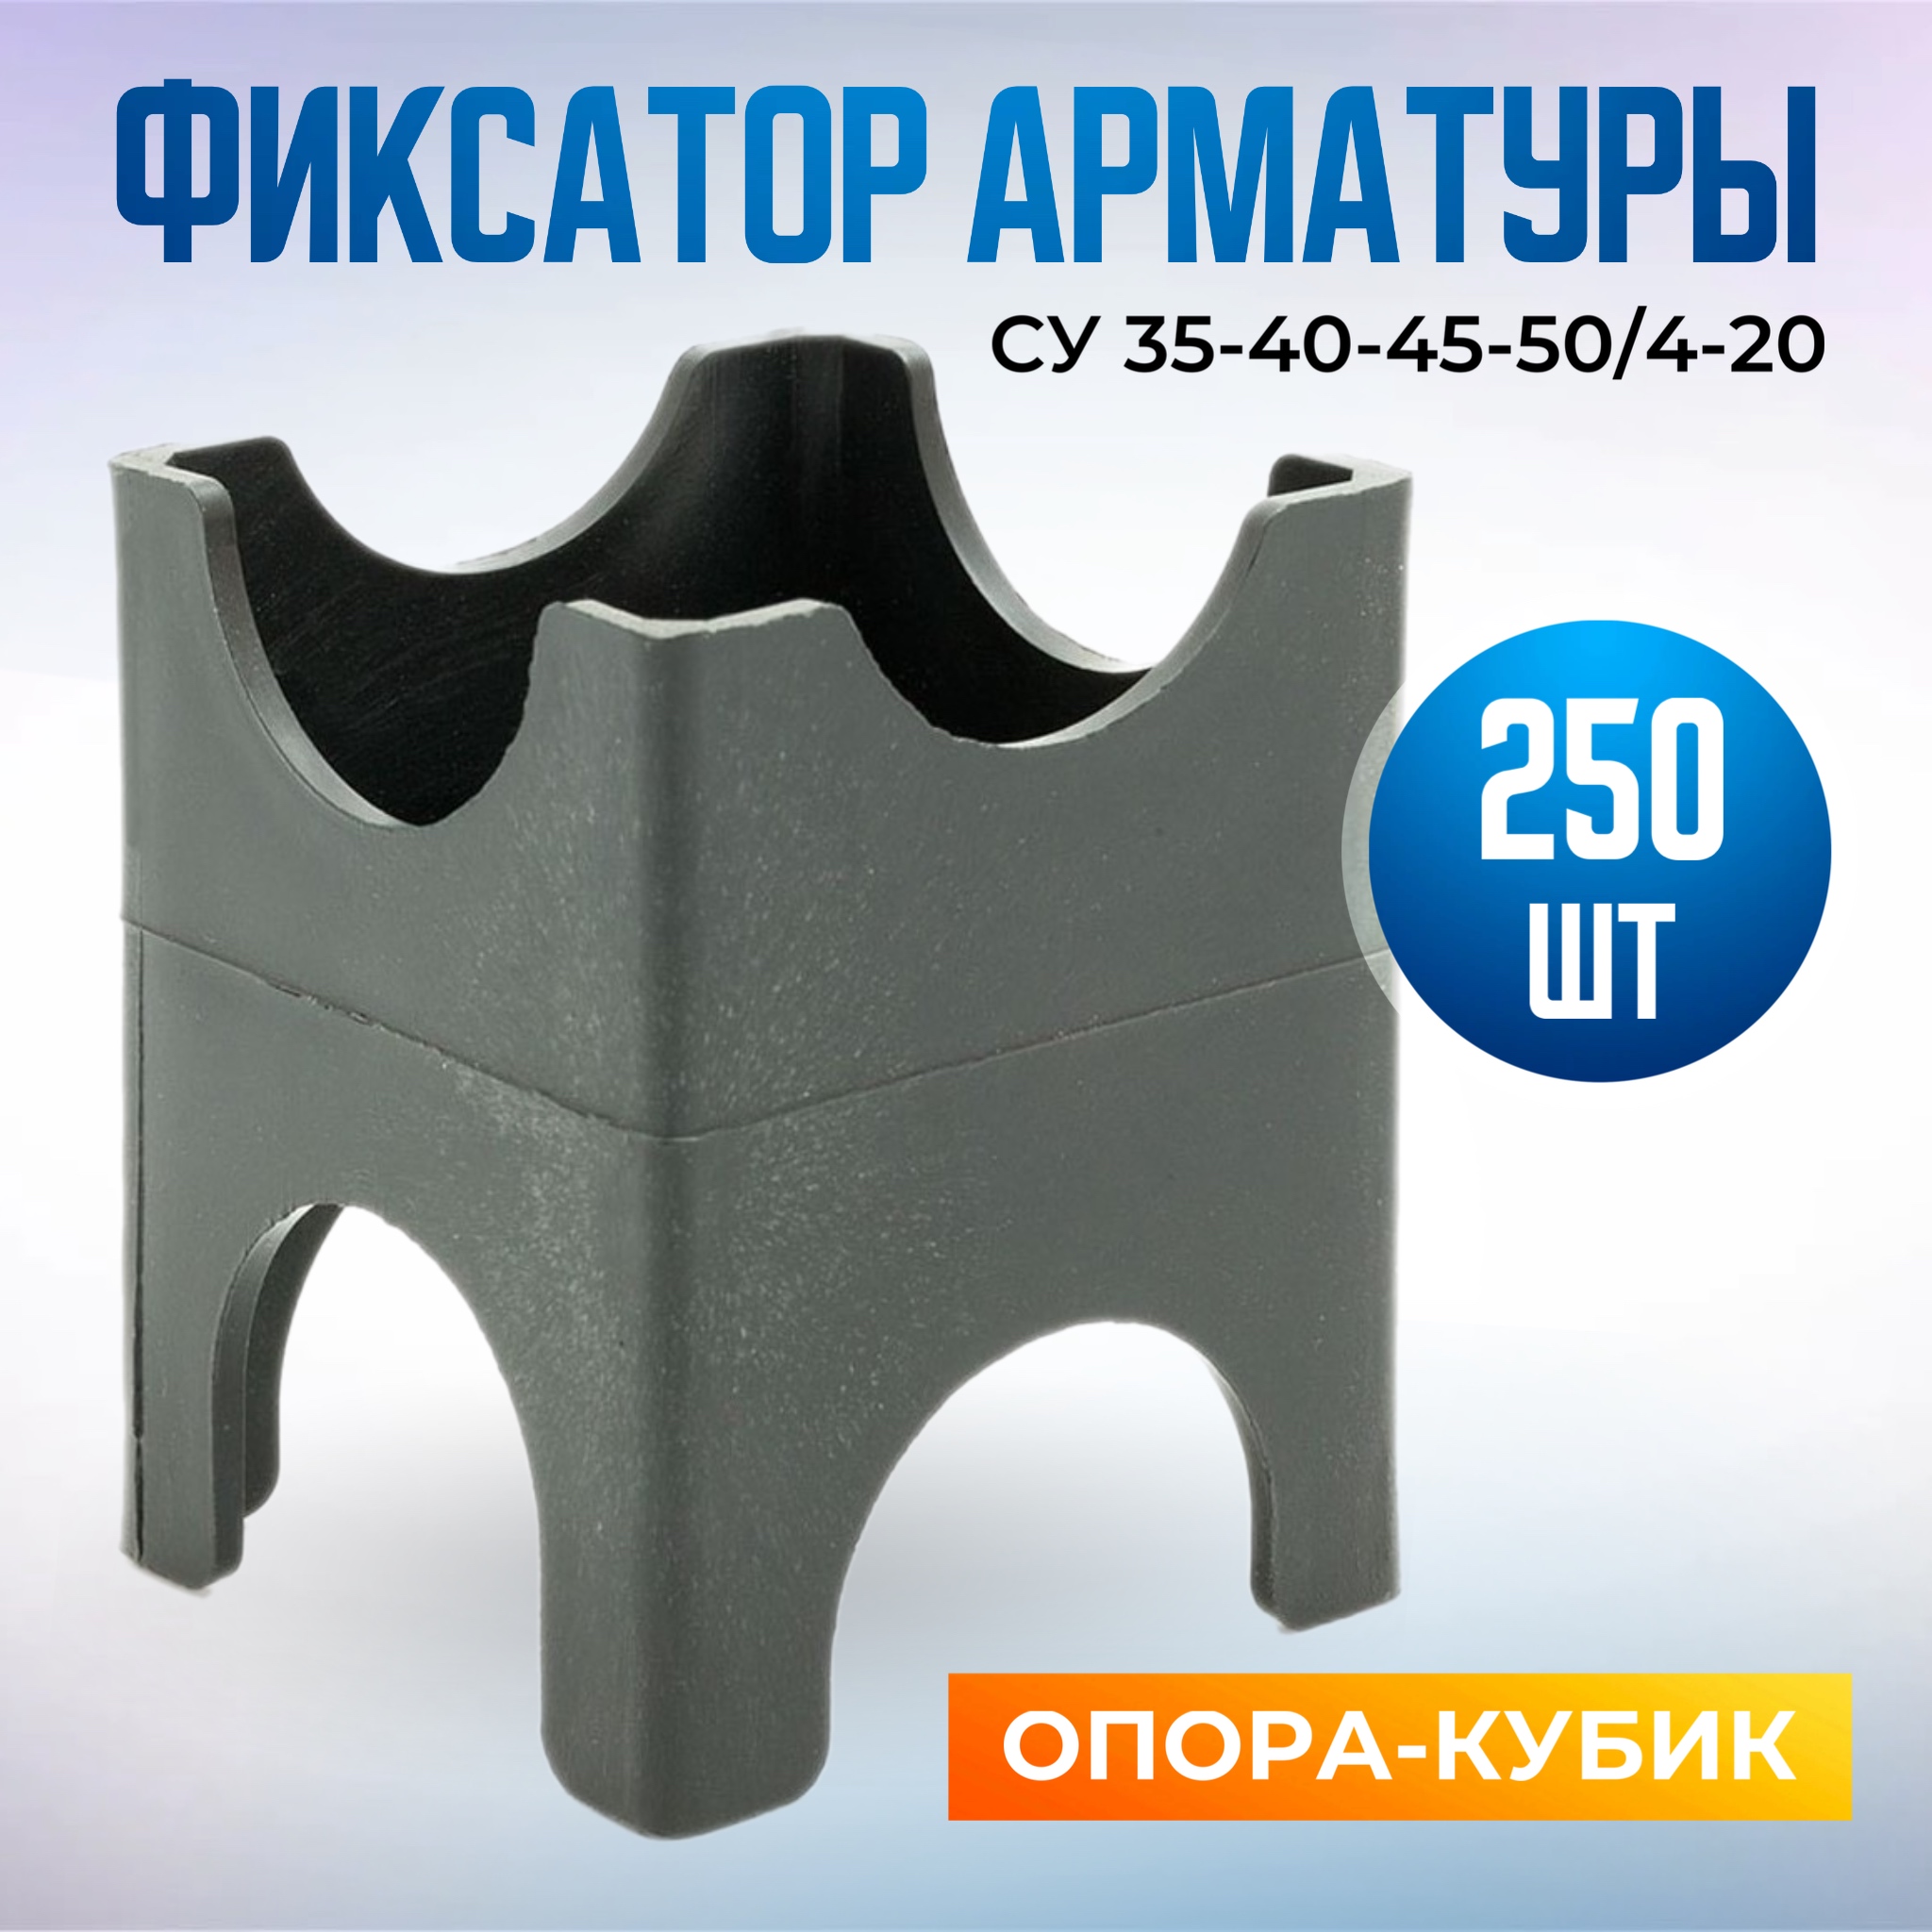 Фиксатор арматуры опора-кубик СУ 35-40-45-50/4-20, в наборе 250 штук фиксатор арматуры опора промышленник